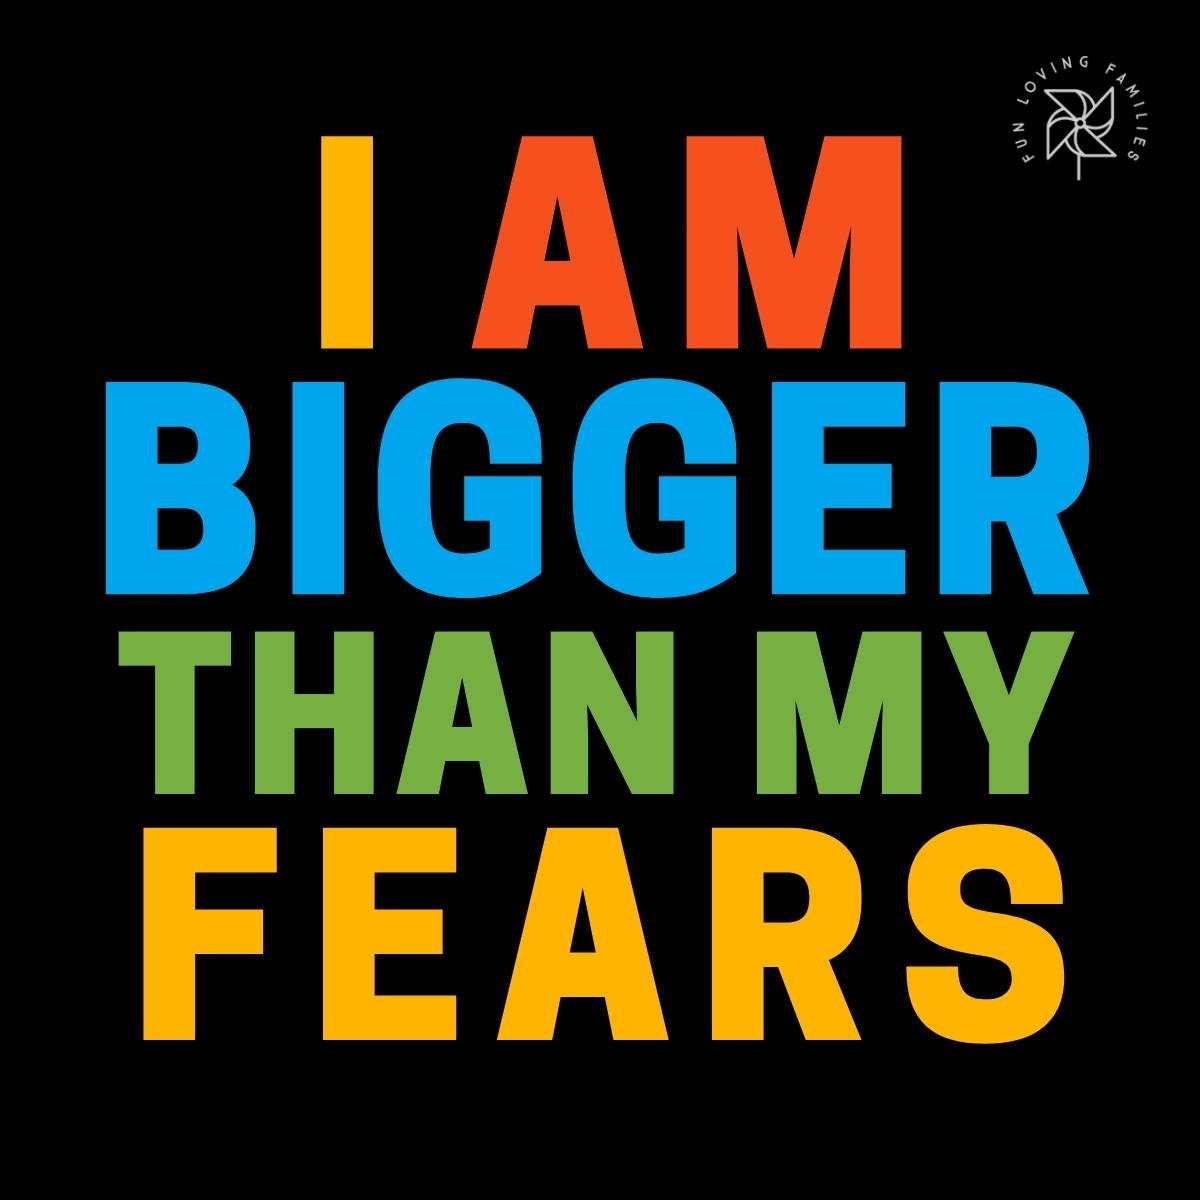 I am bigger than my fears affirmation